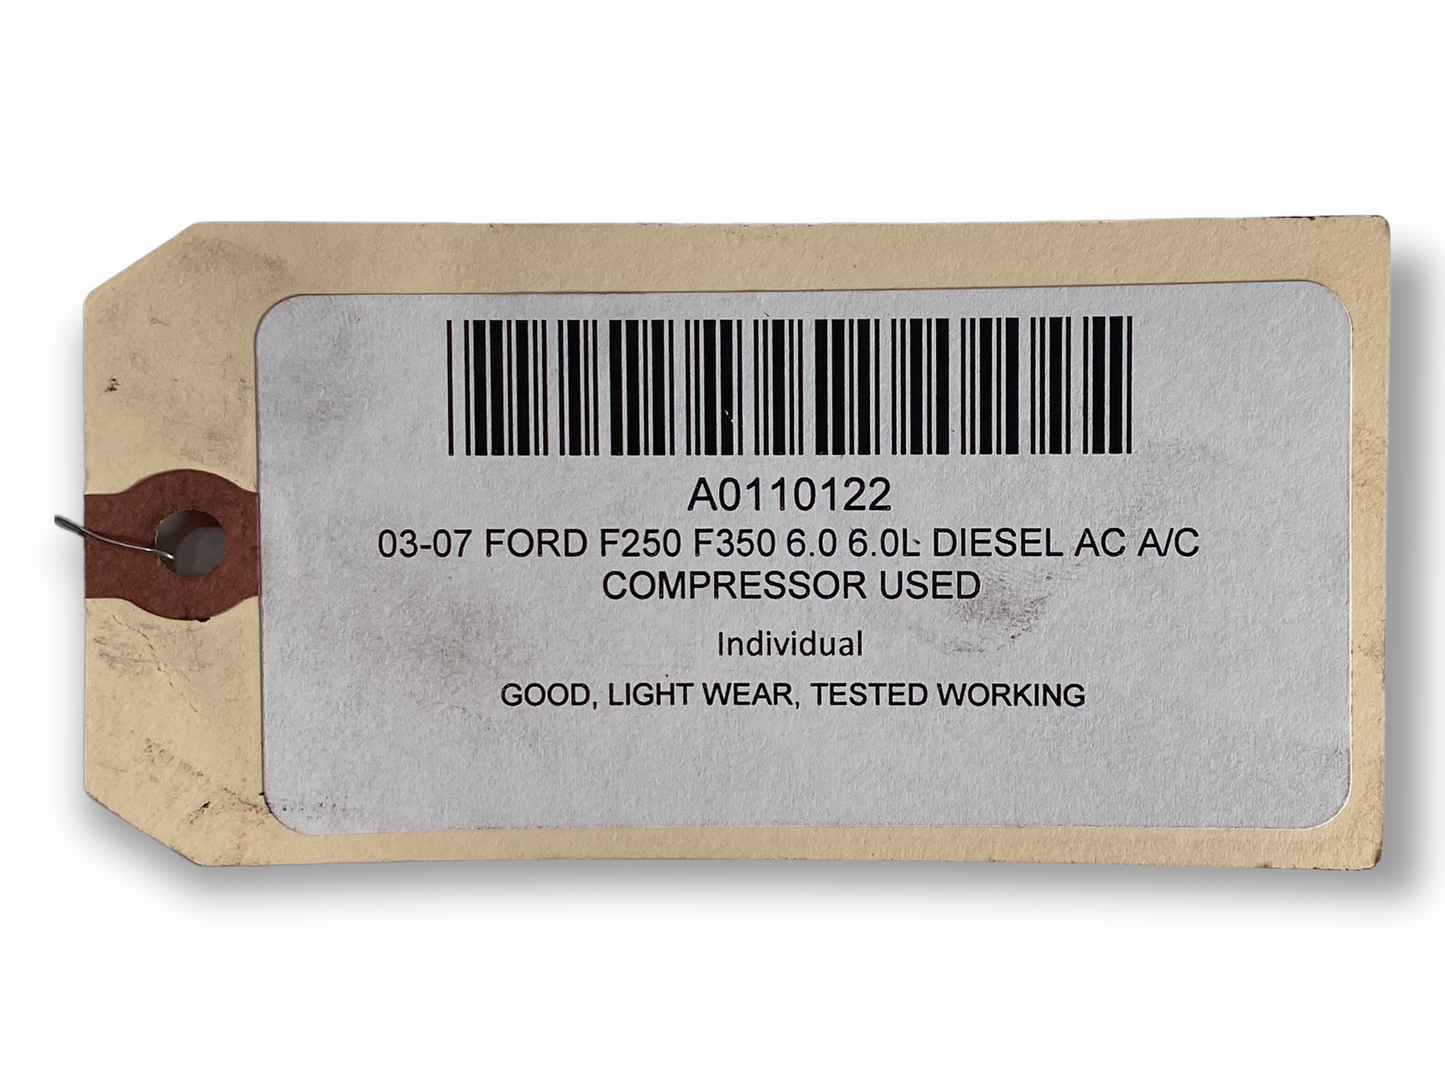 03-07 Ford F250 F350 6.0 6.0L Diesel AC A/C Compressor Used